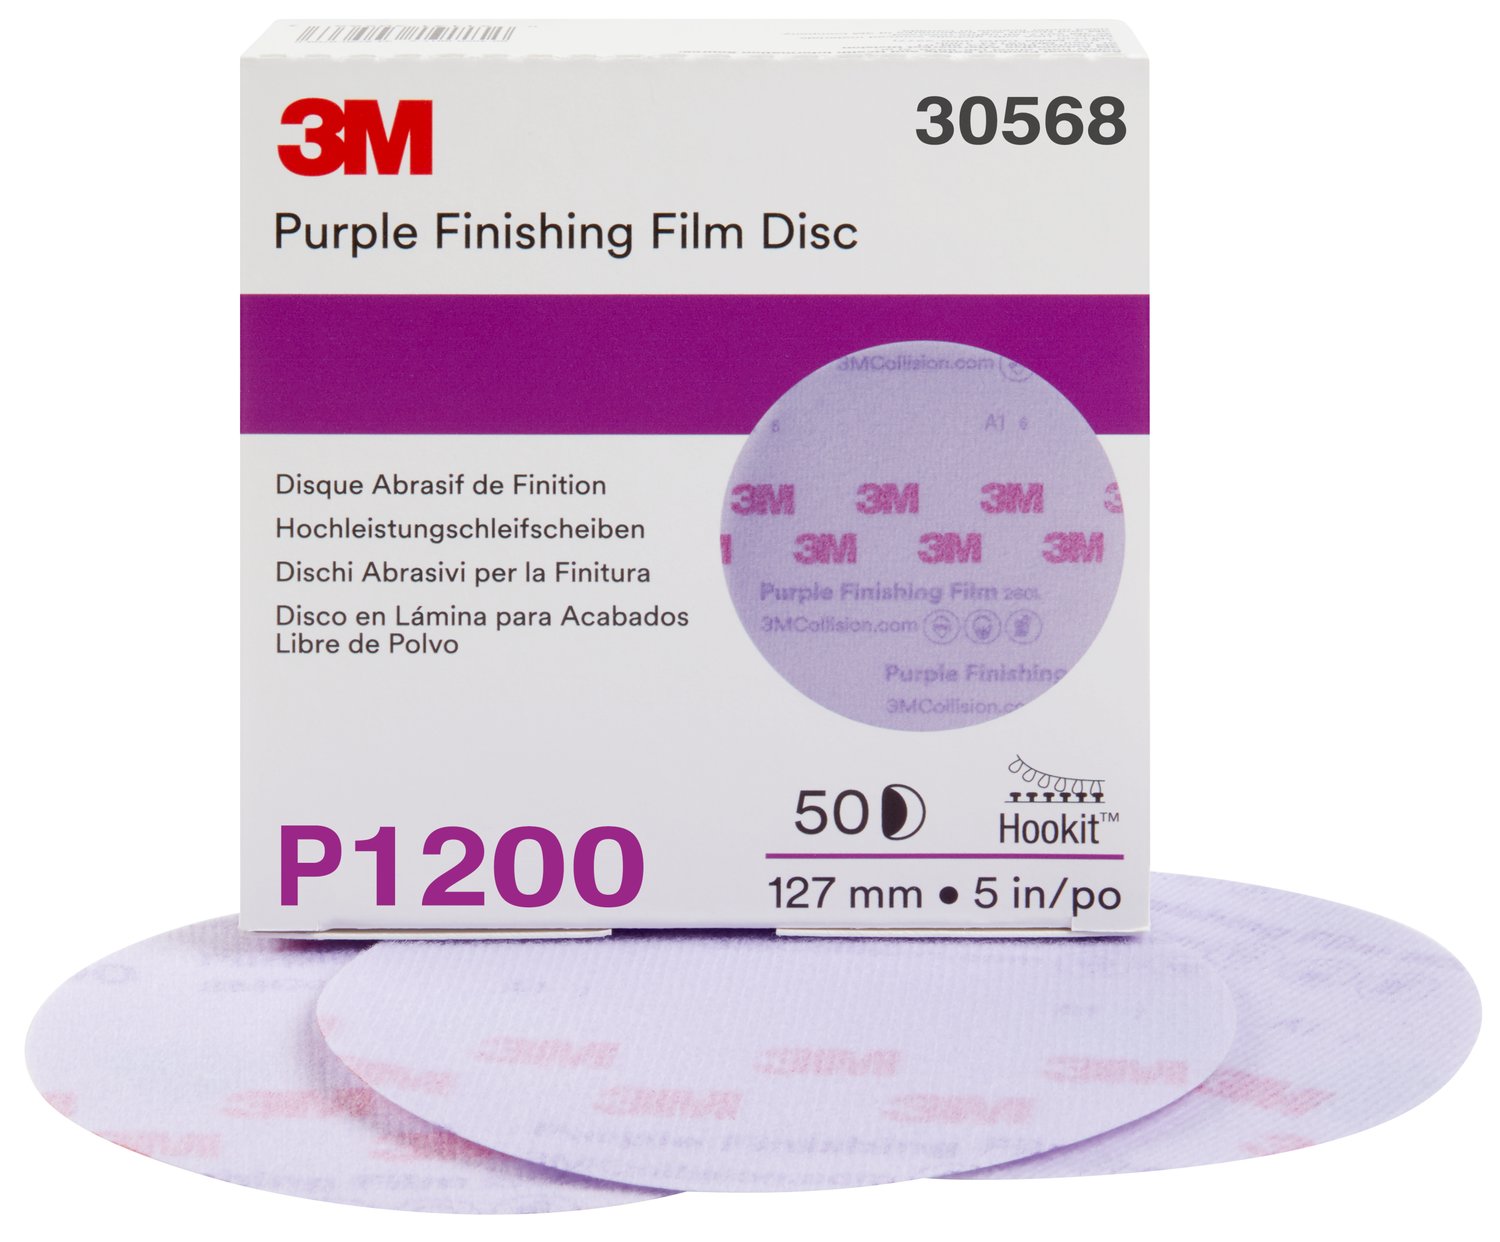 7100122805 - 3M Hookit Purple Finishing Film Abrasive Disc 260L, 30568, 5 in,
P1200, 50 discs per carton, 4 cartons per case